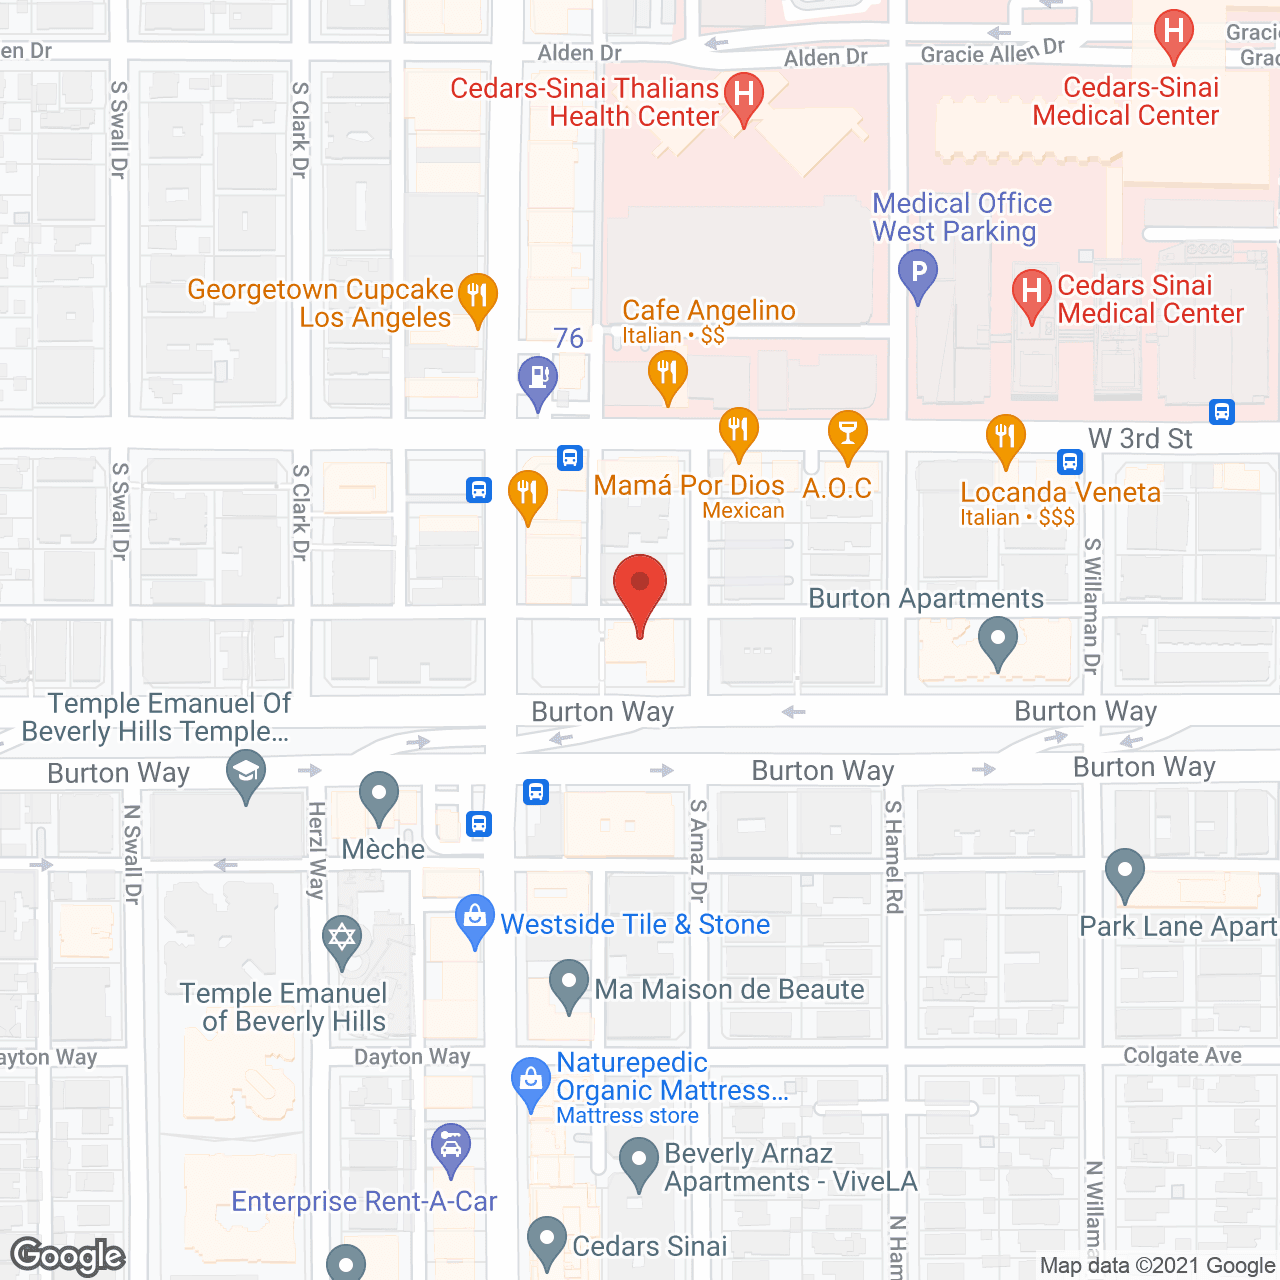 Beverly Hills Carmel Inc. North in google map